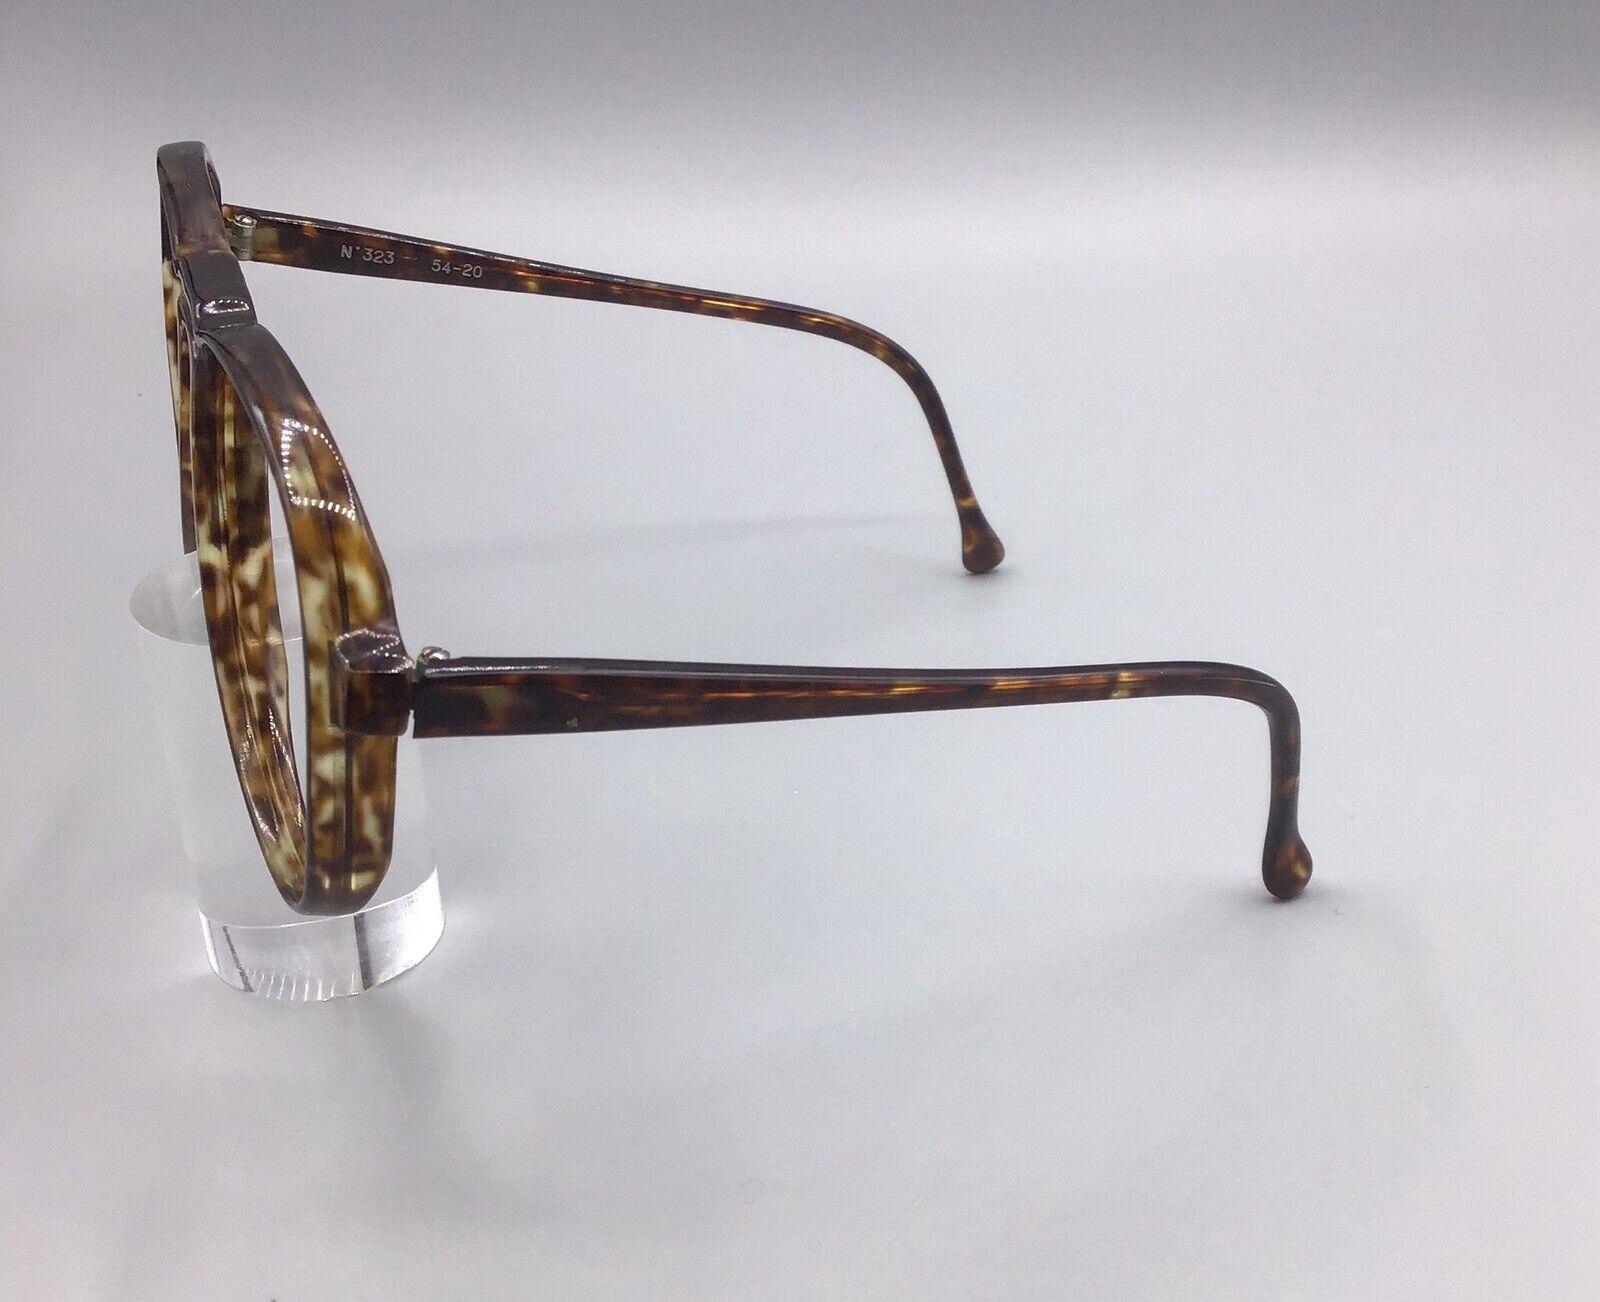 Frame France occhiale lunettes c.16609 n.323 vintage eyewear